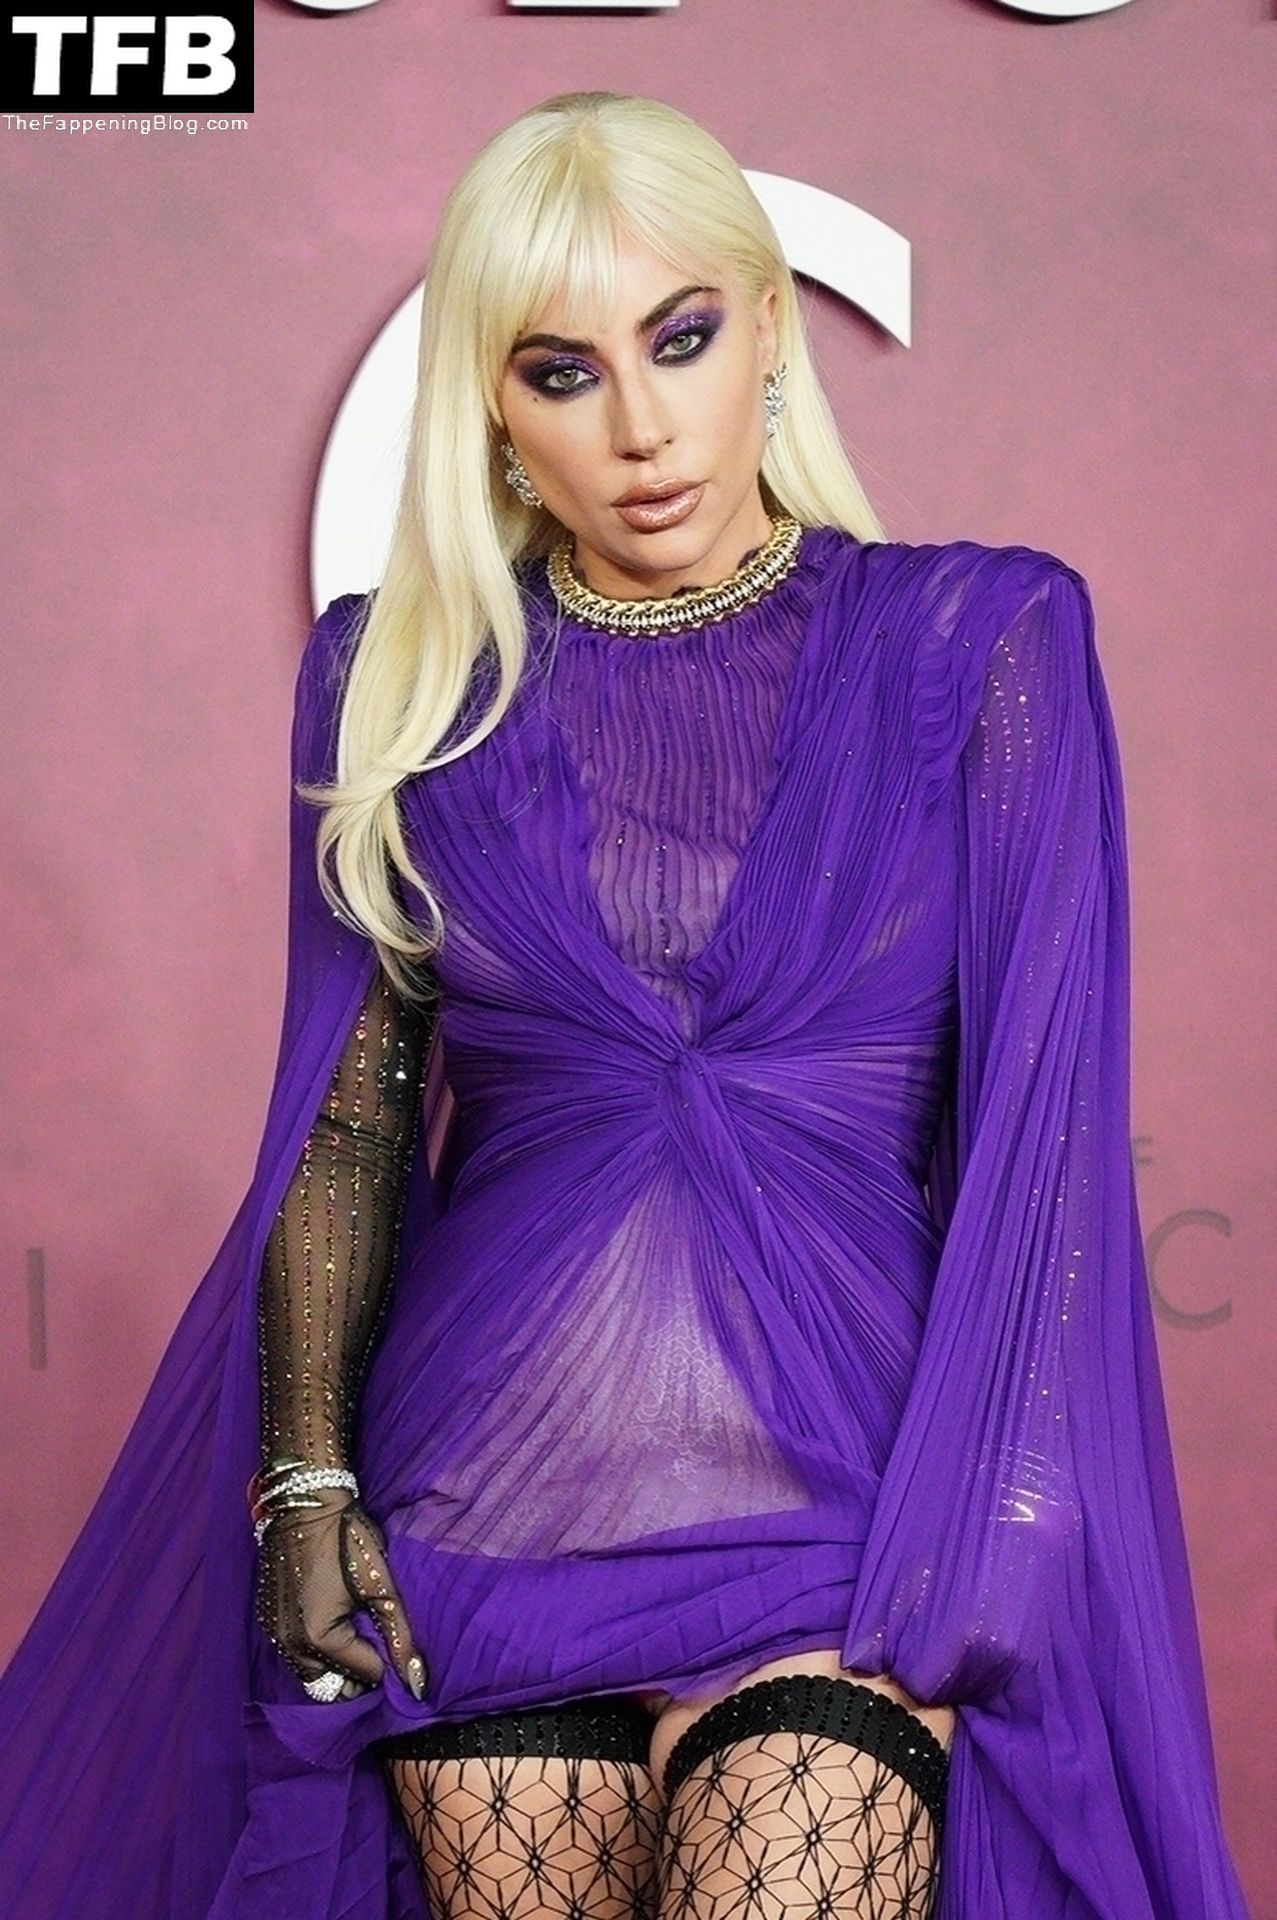 Lady-Gaga-Sexy-The-Fappening-Blog-73.jpg